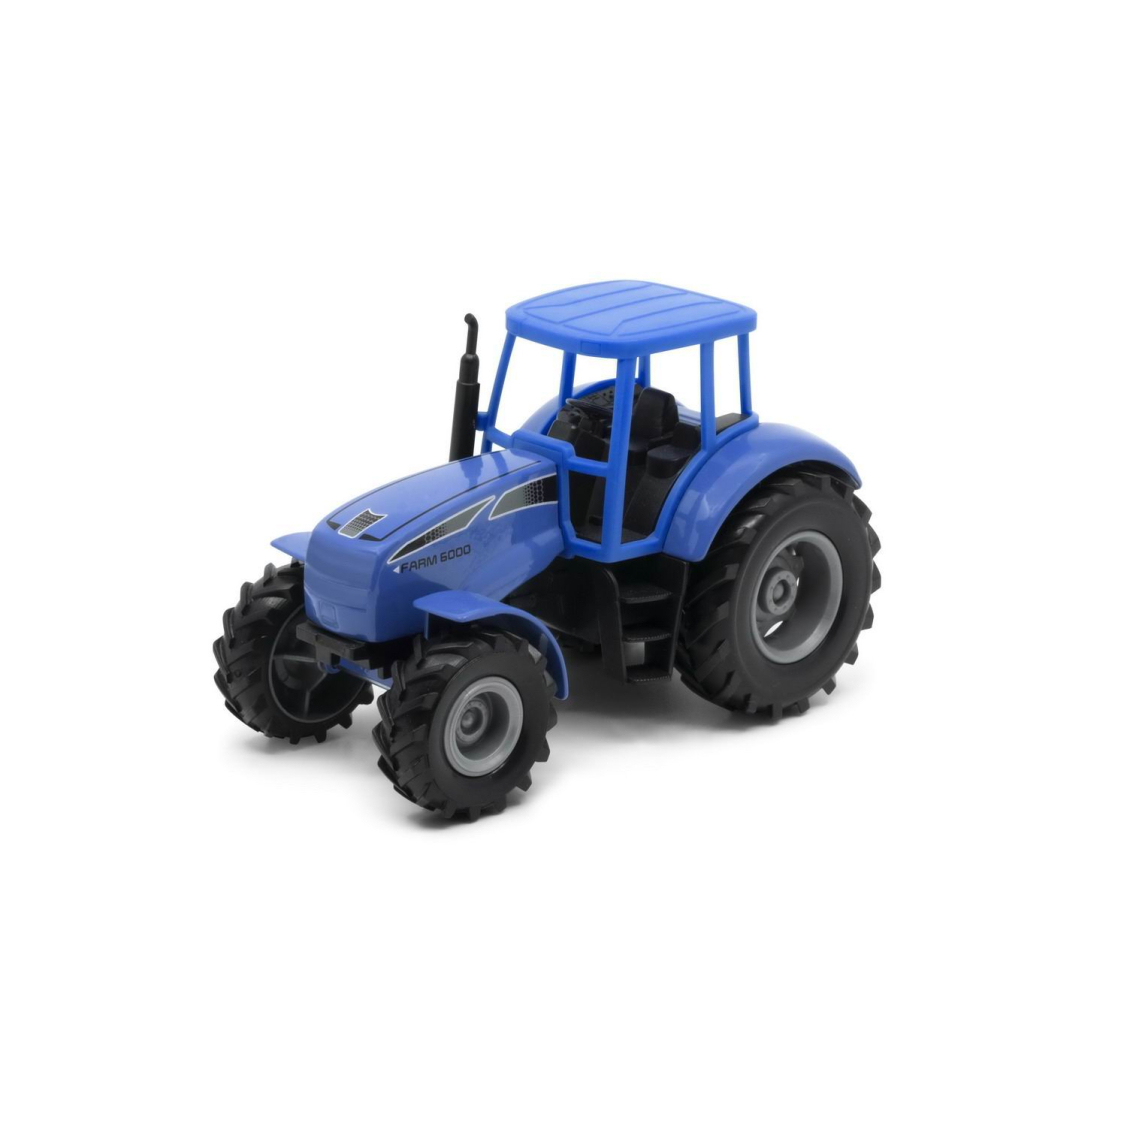 Машинка Welly Трактор синий машинка для гибкого автотрека magic tracks синий